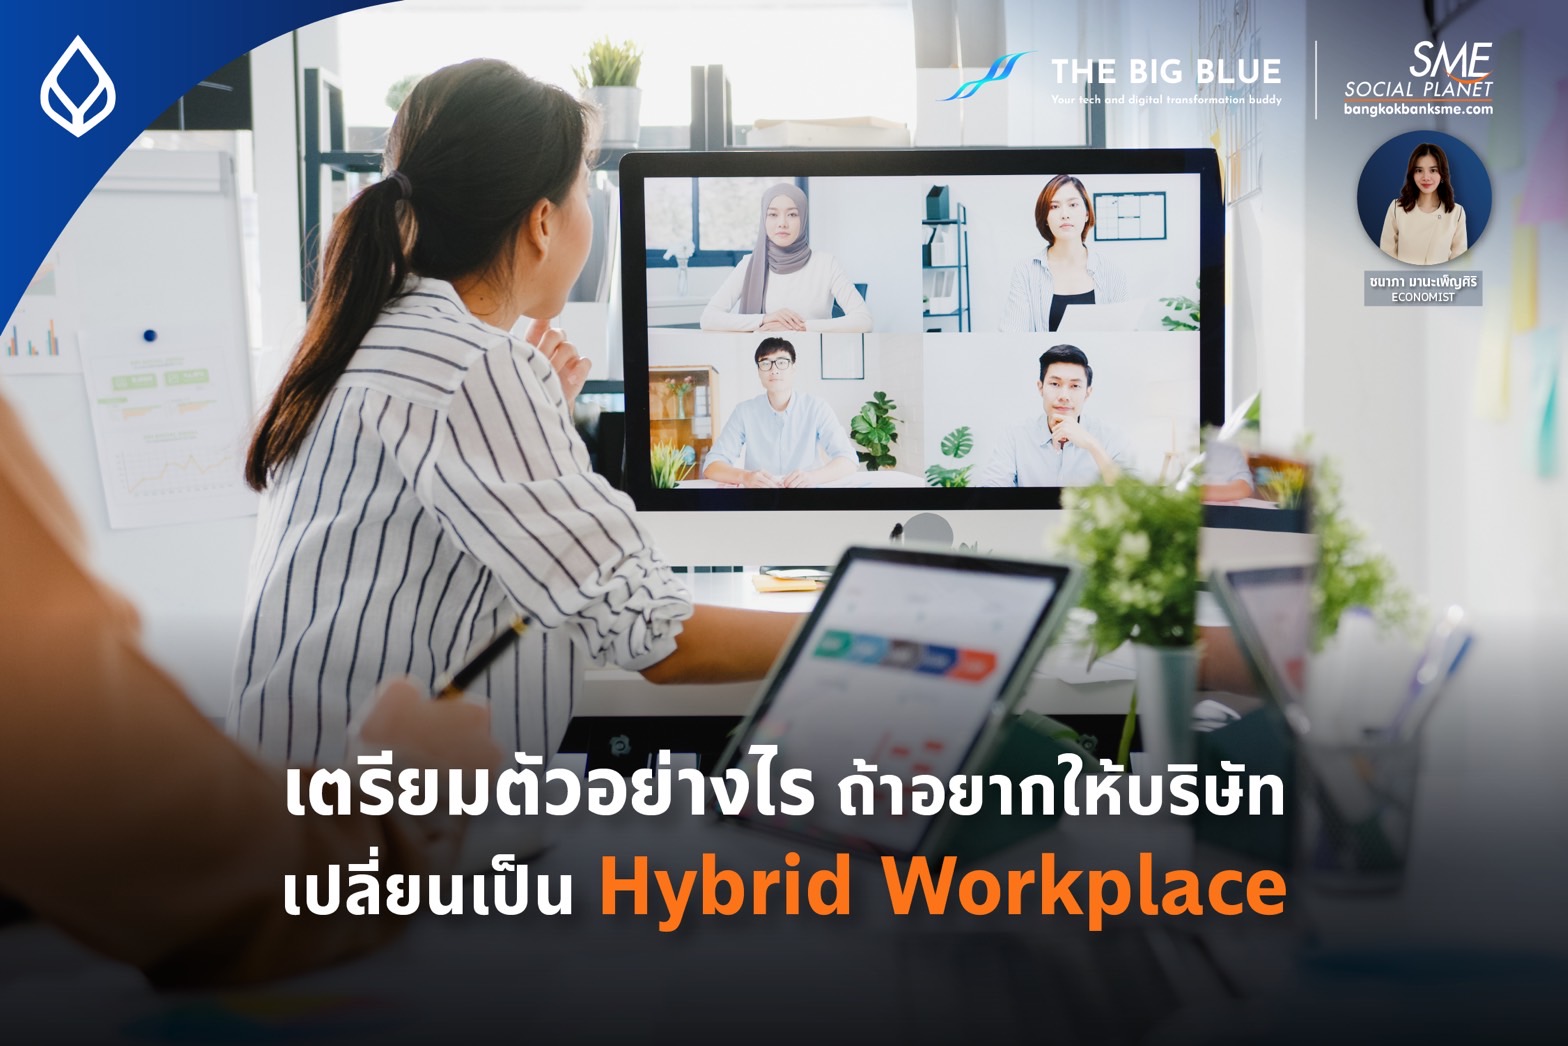 THE BIG BLUE | ต้องเตรียมตัวอย่างไร? ถ้าอยากให้บริษัทเปลี่ยนเป็น Hybrid Workplace